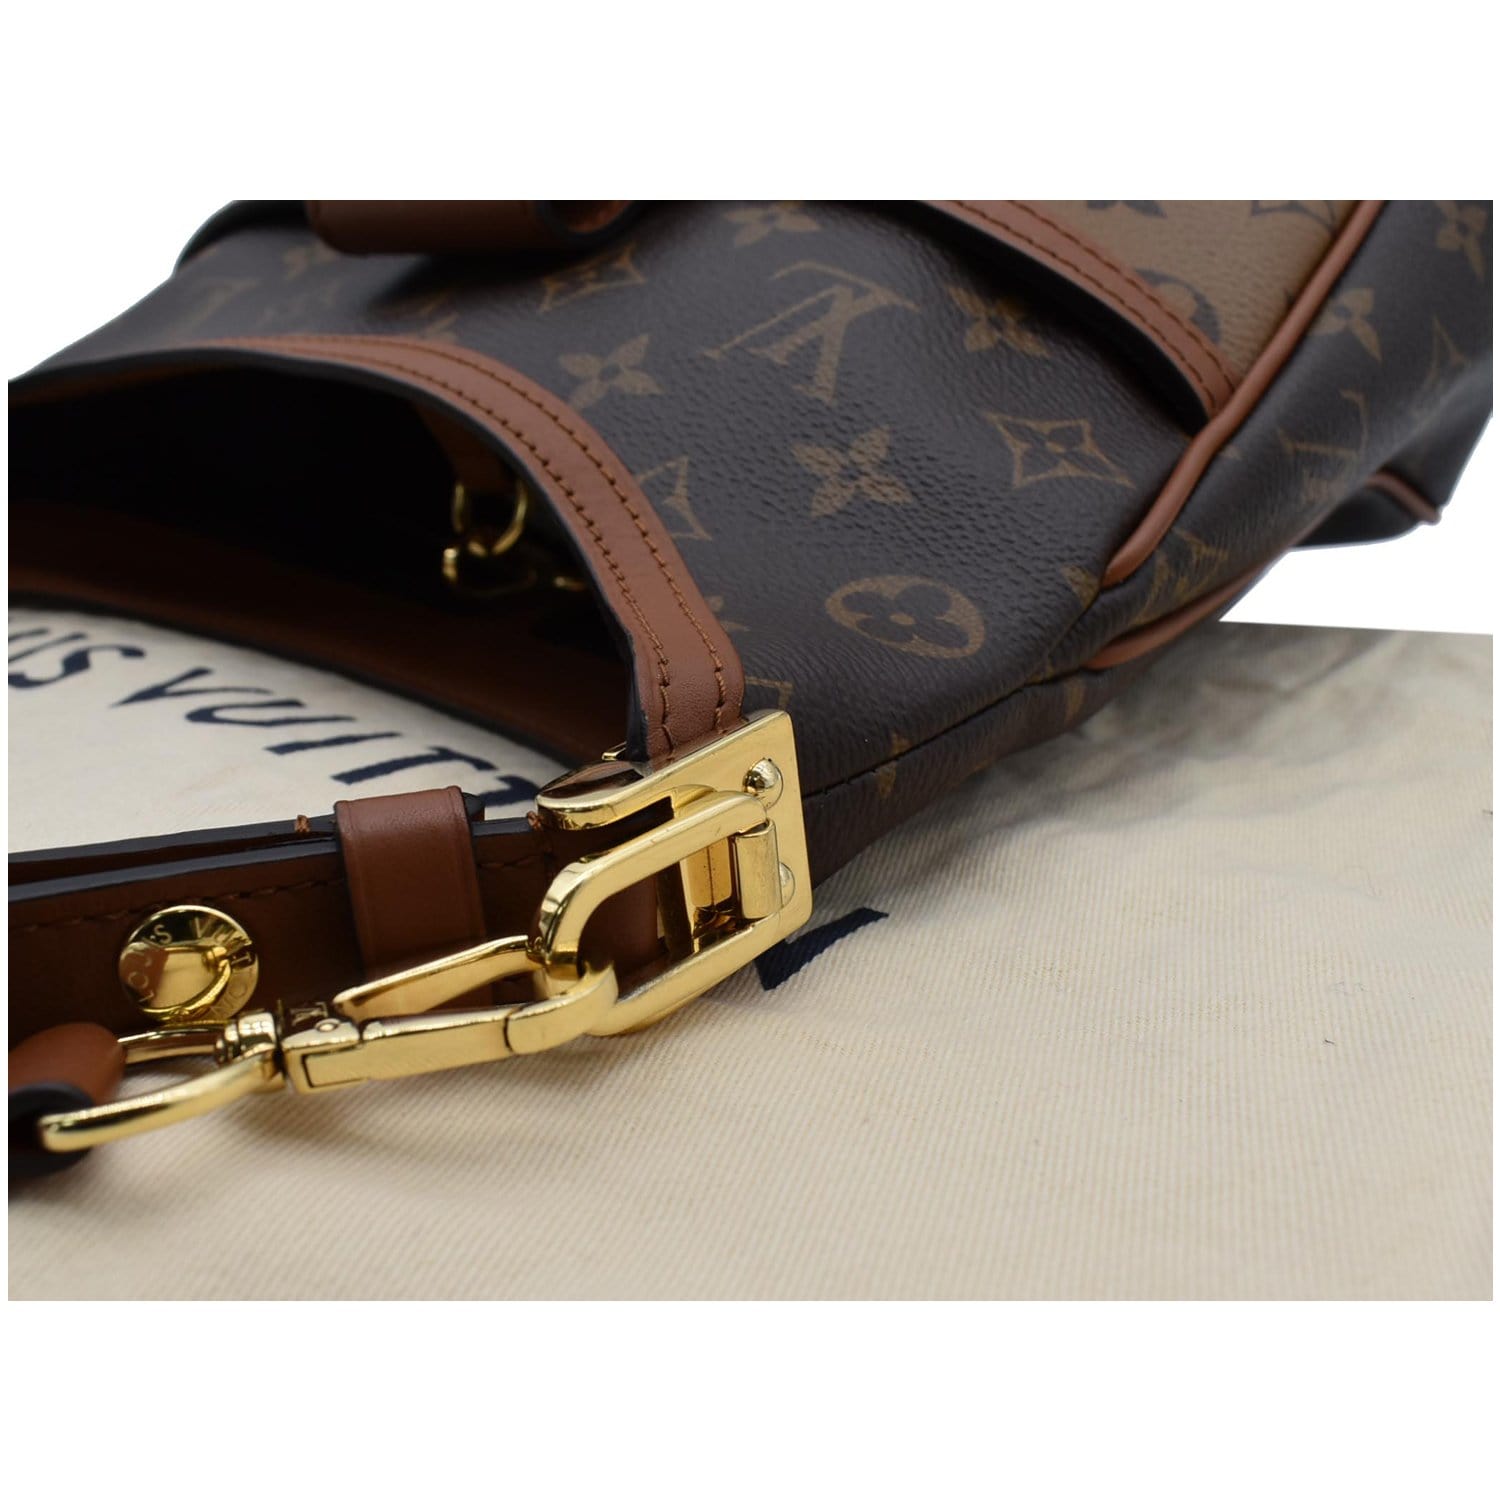 Louis Vuitton Reverse Monogram Dauphine Backpack PM - Brown